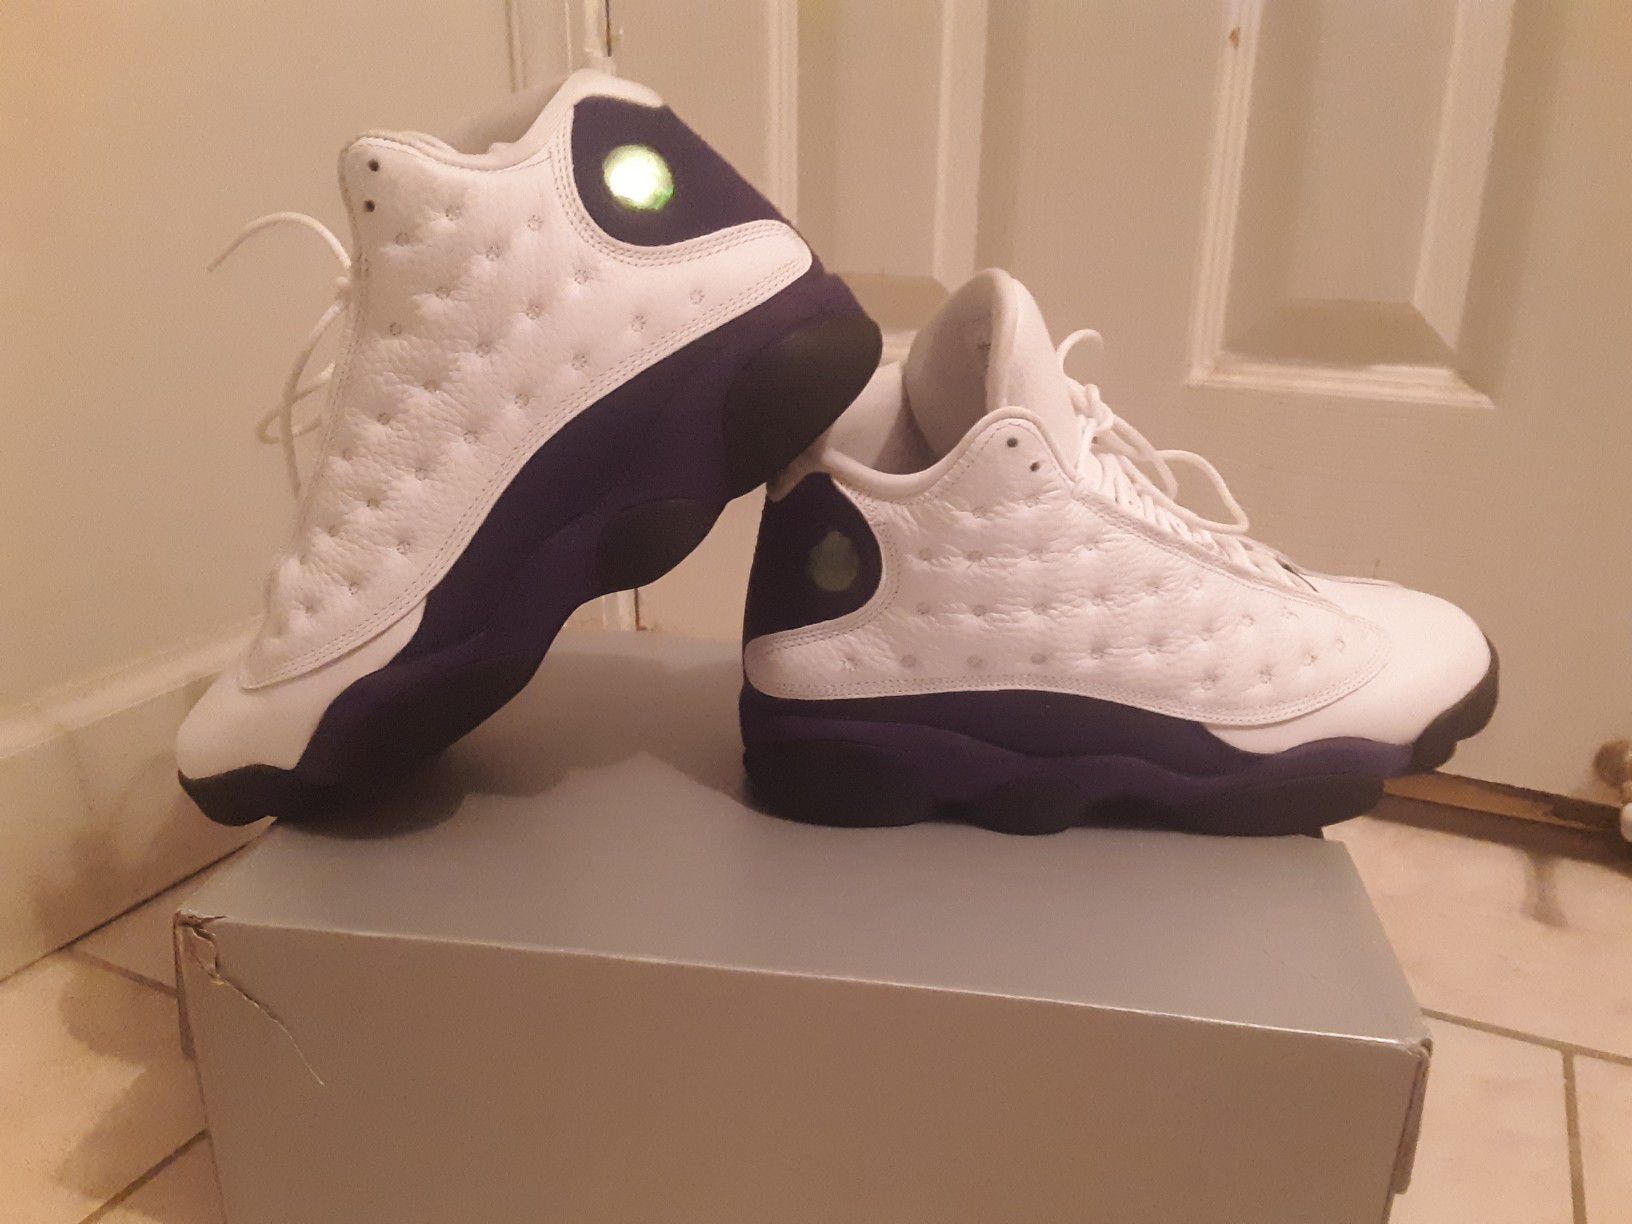 Jordan 13 purple size 9.5